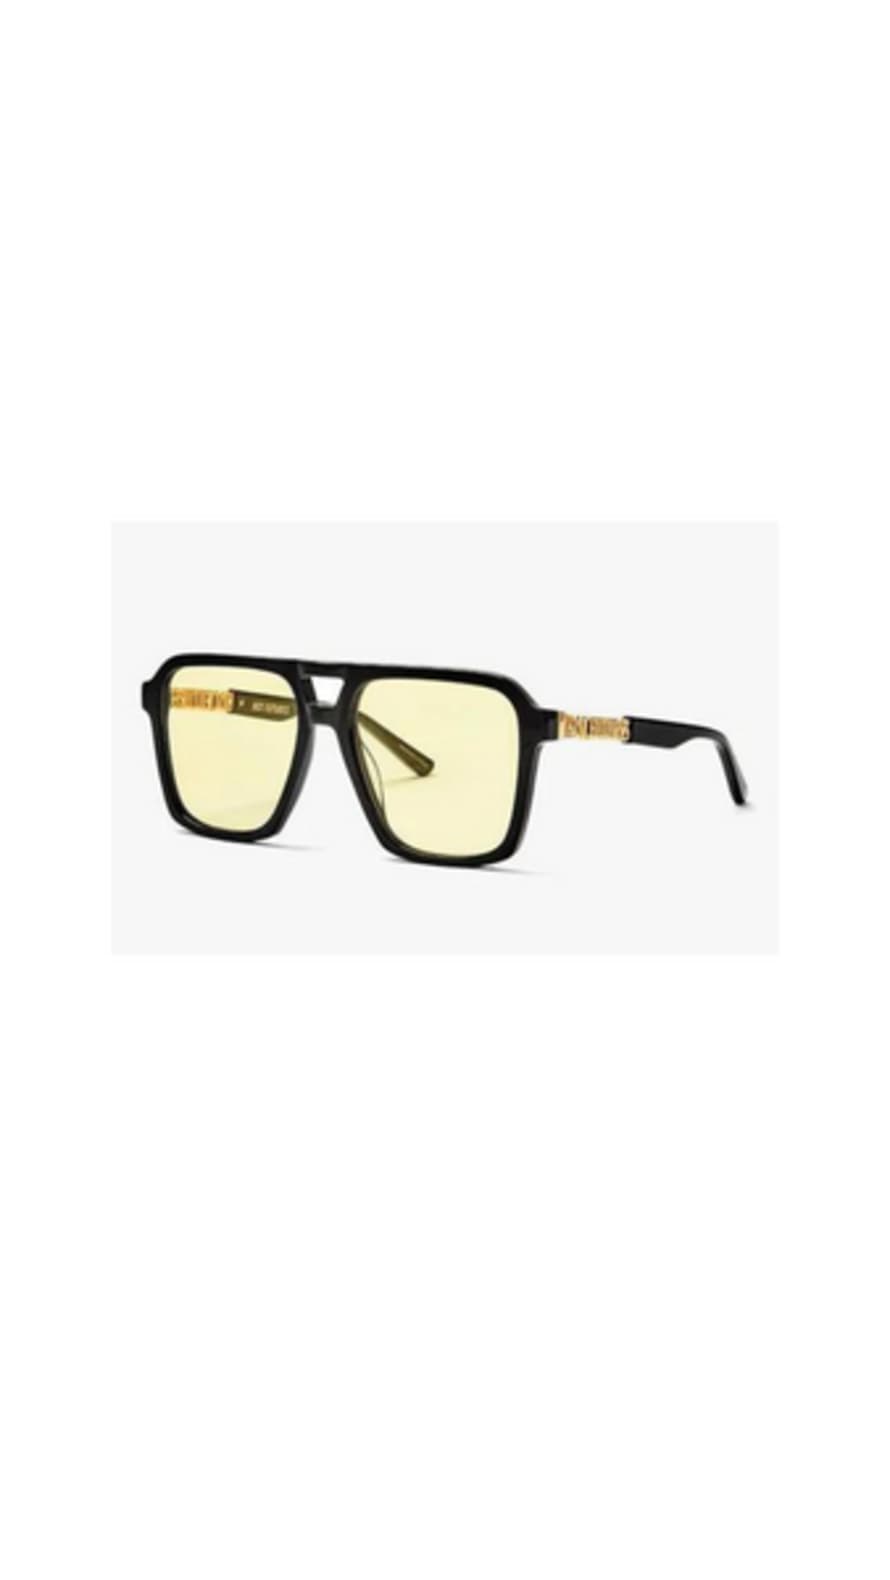 Hot Futures Hustler Recycled Gloss Black Yellow Lens Sunglasses